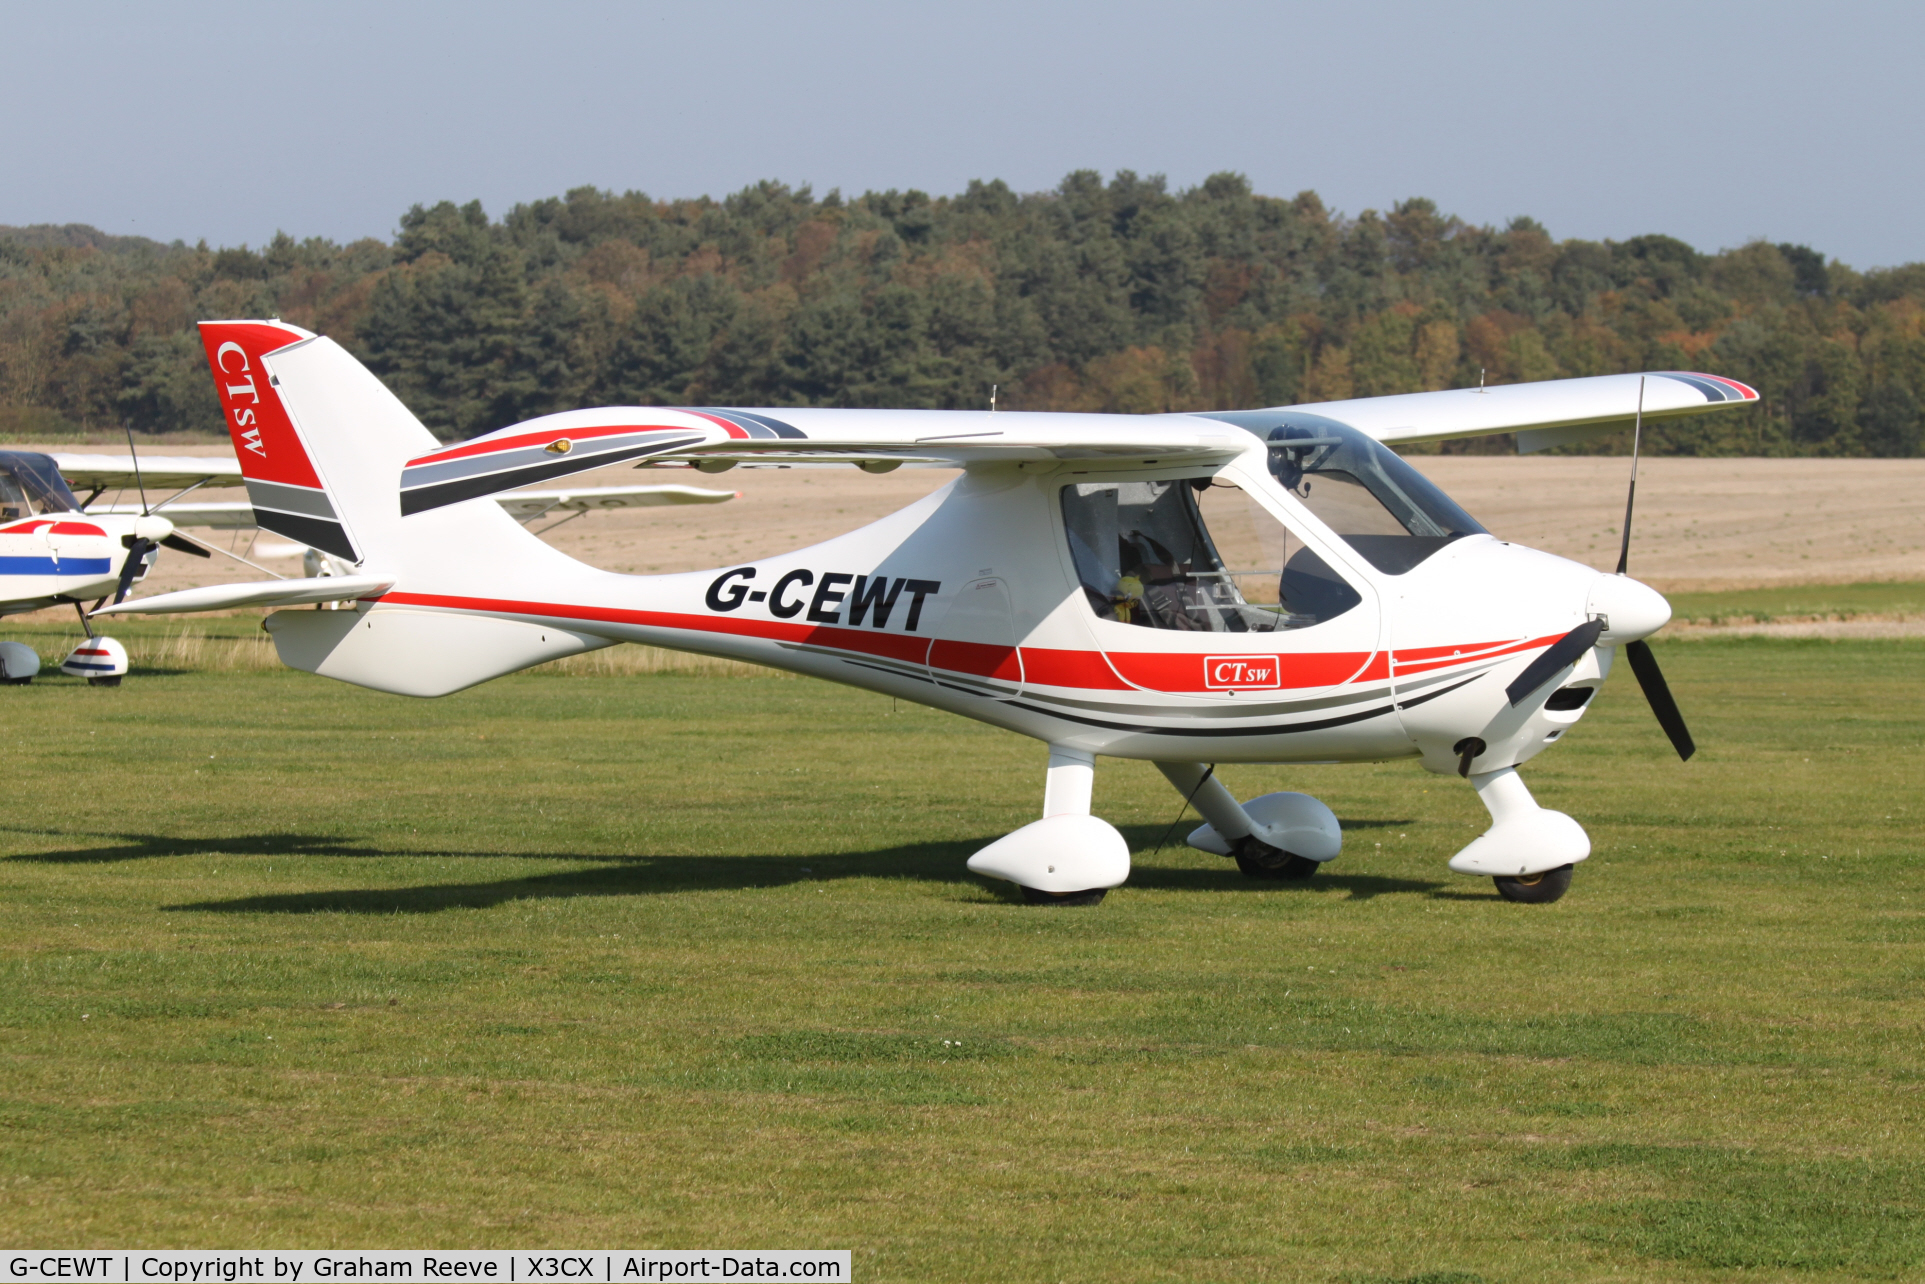 G-CEWT, Flight Design CTSW C/N 8158, Parked at Northrepps.